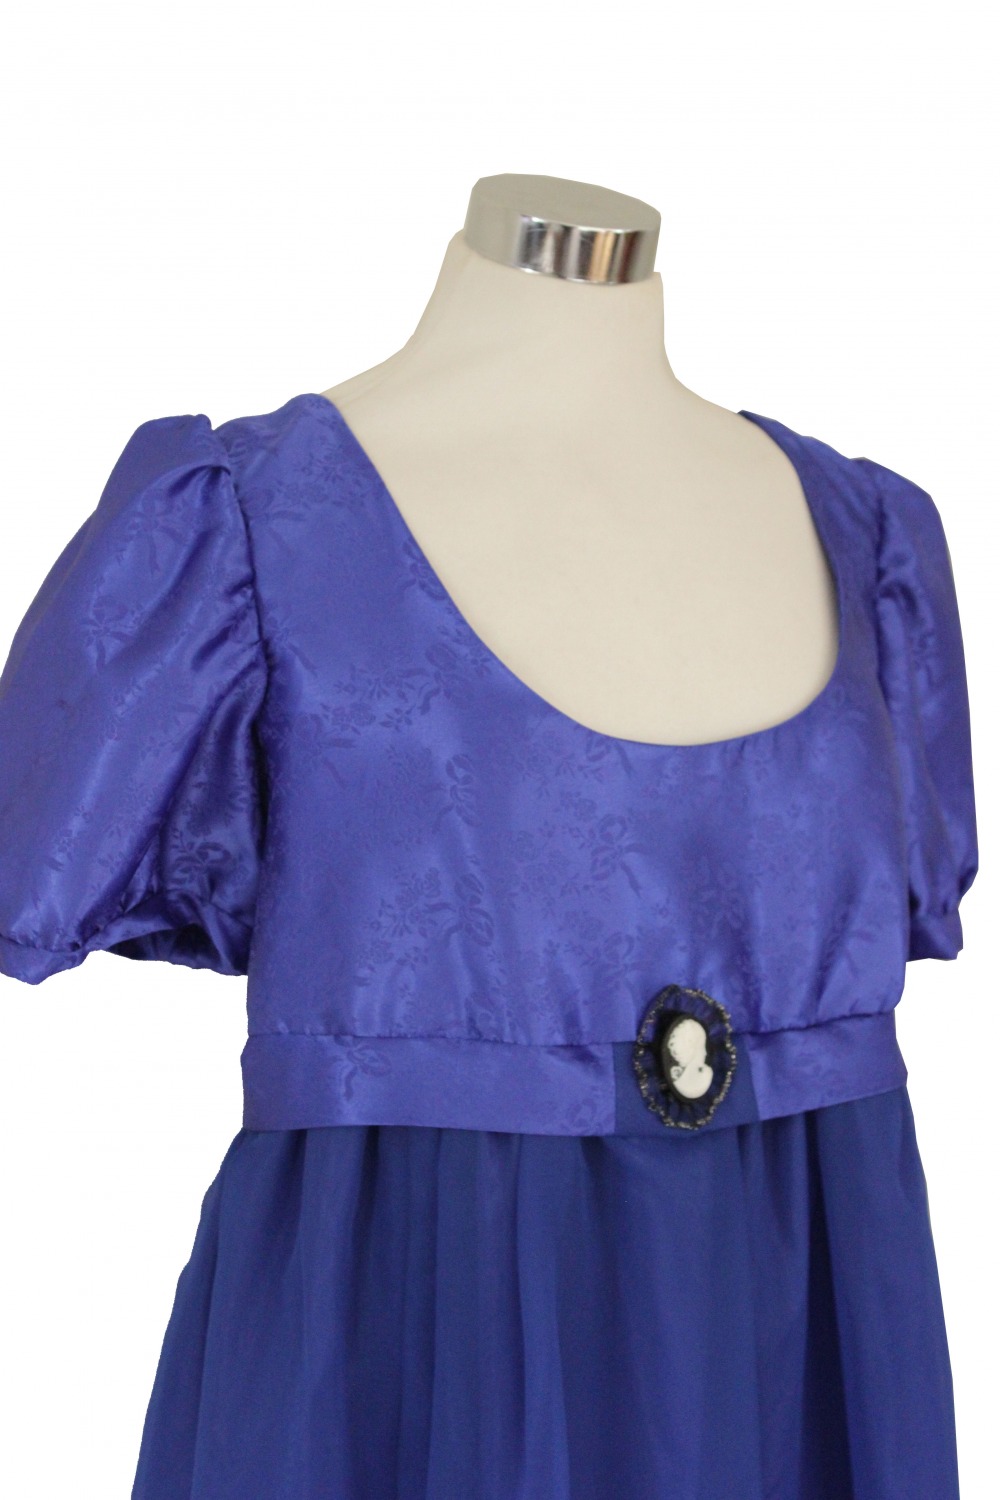 Ladies 19th Century Jane Austen Regency Day Evening Costume Size 10 - 12 Image